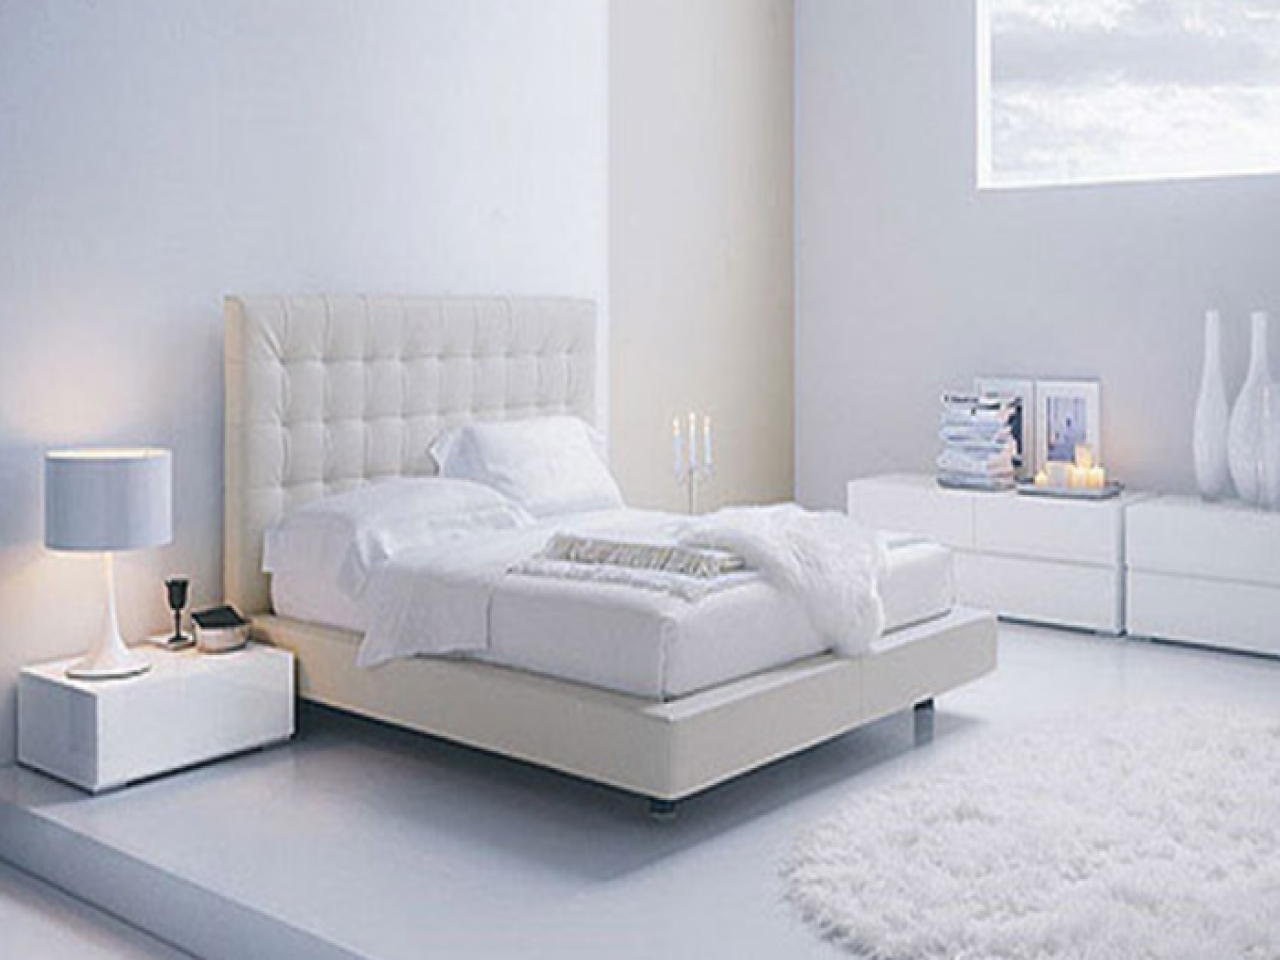 white bedroom furniture decorating ideas photo - 5